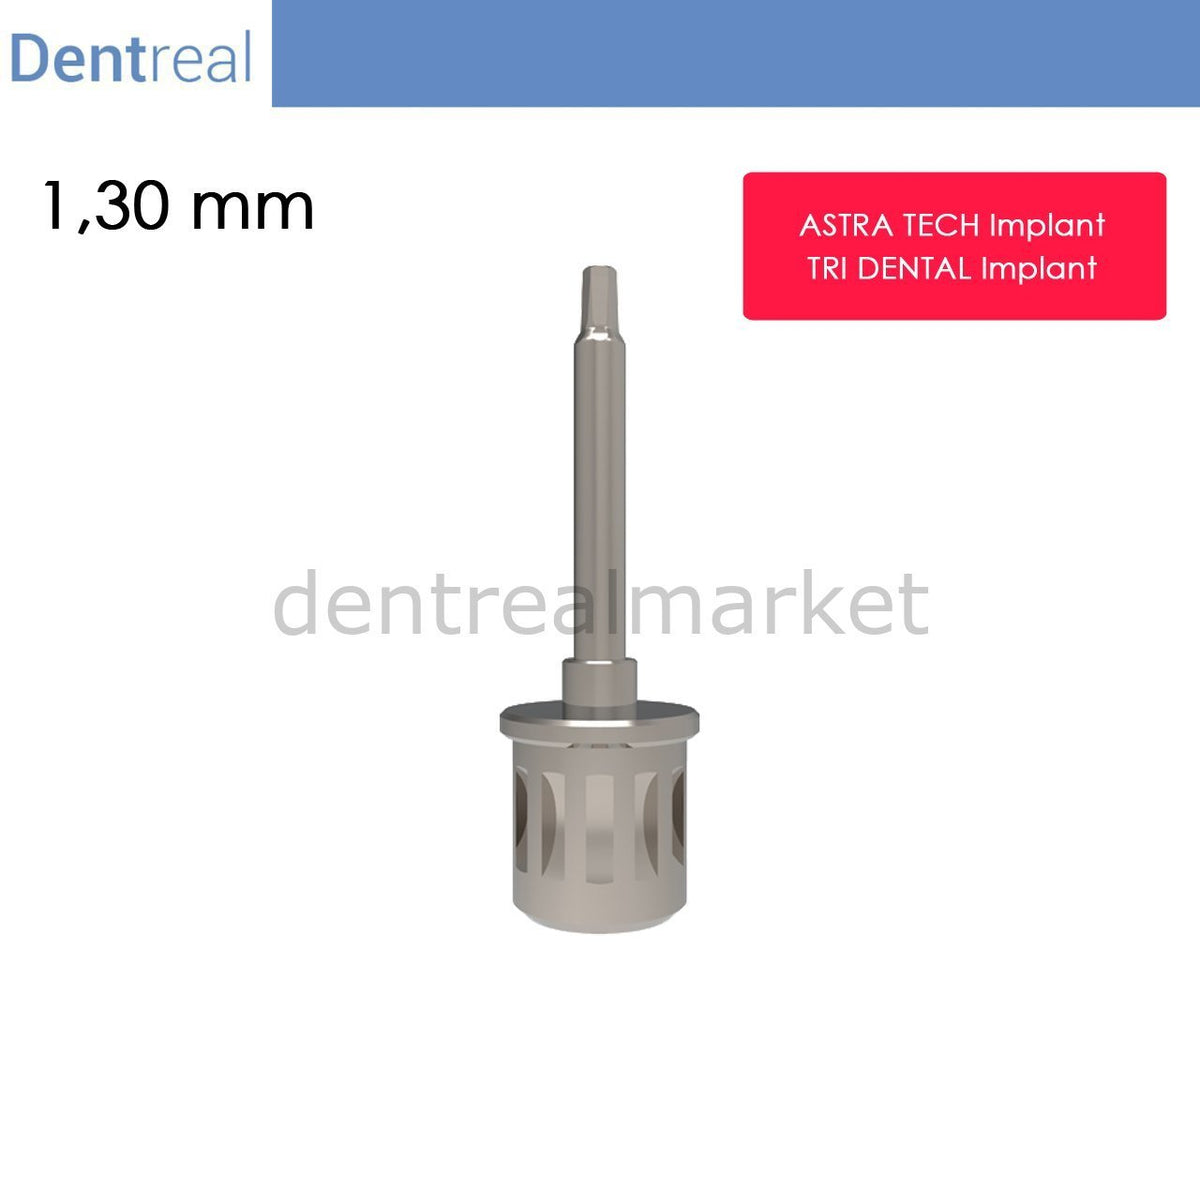 DentrealStore - Dentreal Screwdriver for Astra Tech Implant - 1,30 mm Hex Driver